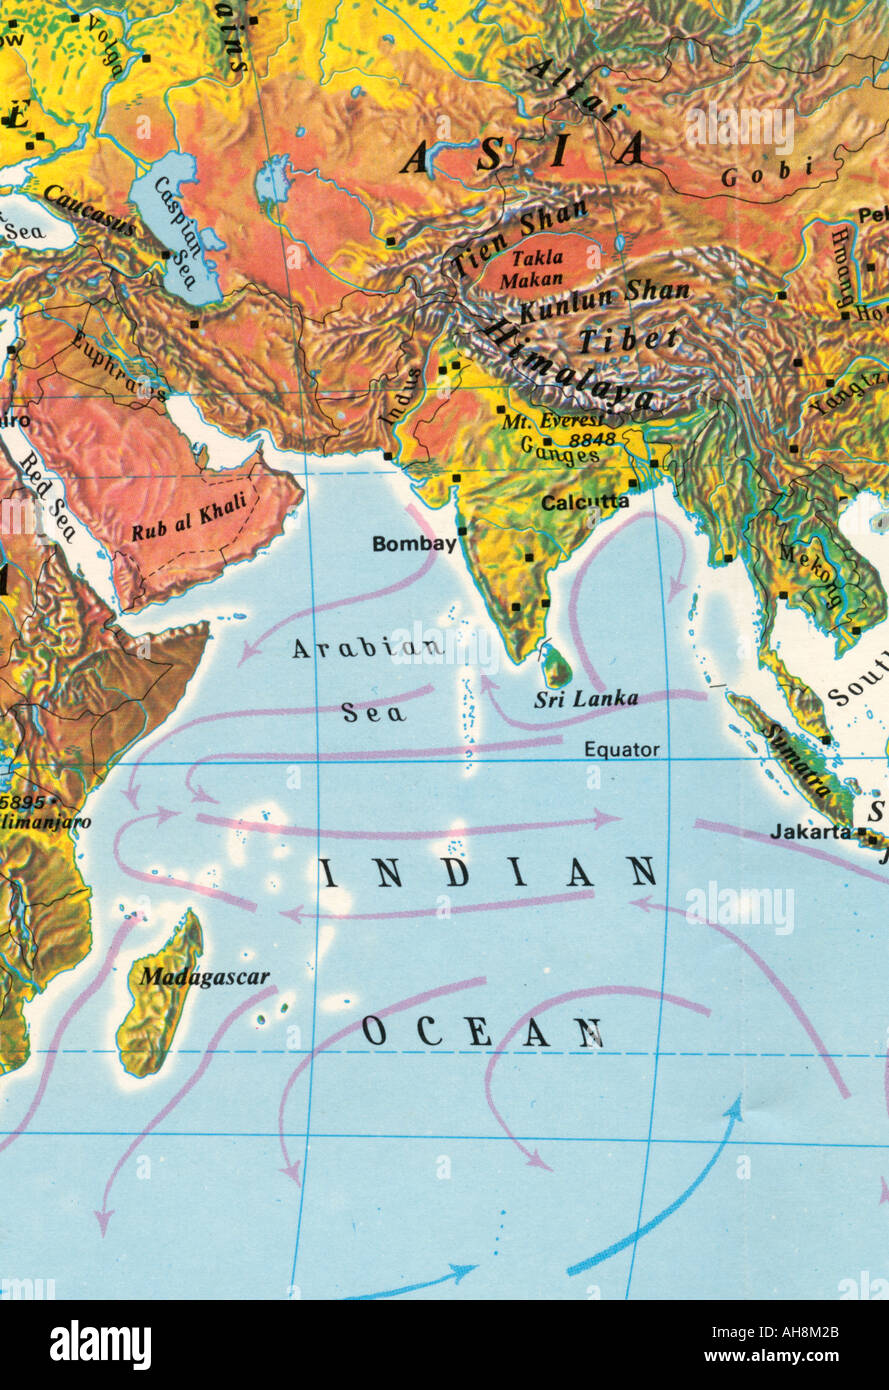 Map of India Asia Indian Ocean Arabian Sea Sri Lanka Equator Madagascar Tibet Indian map Stock Photo